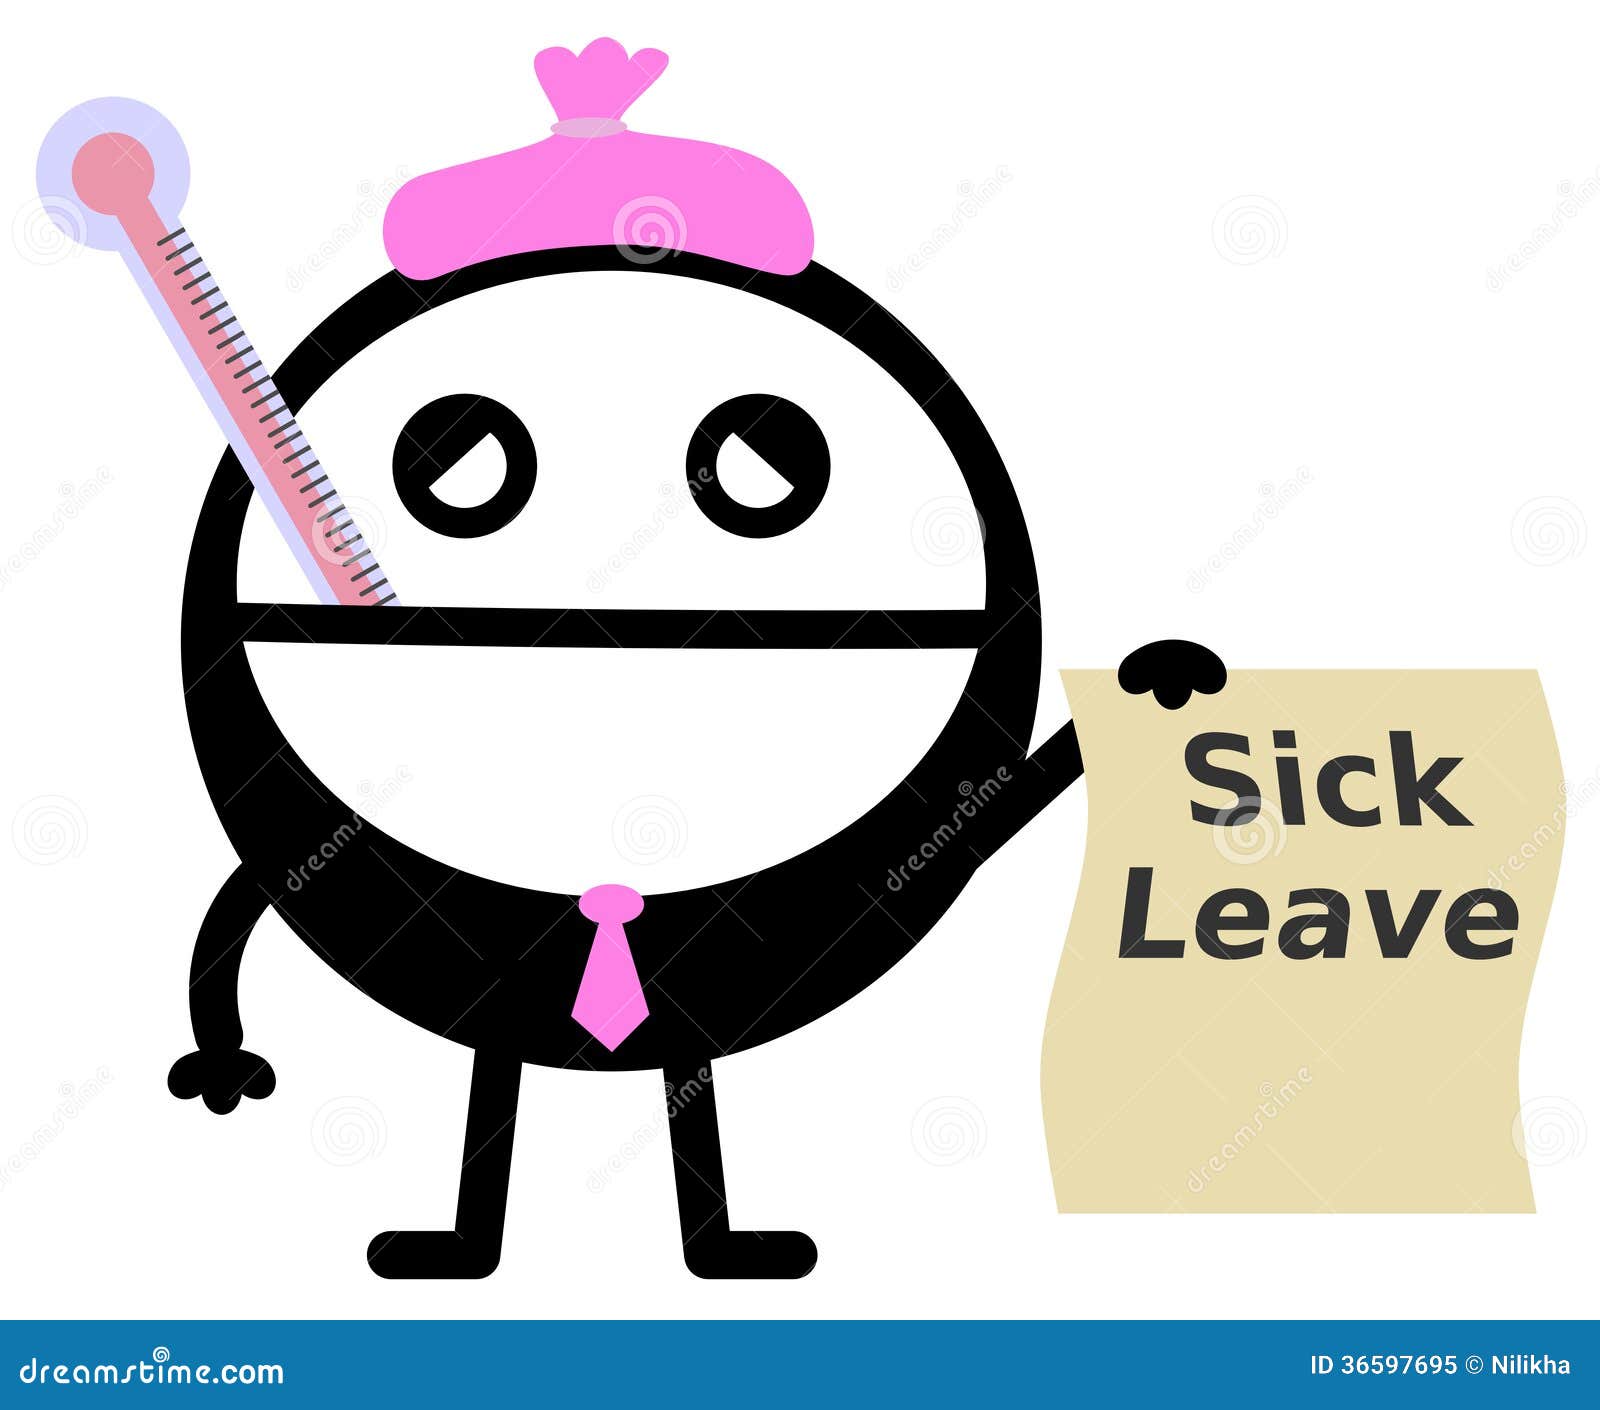 my sick leave